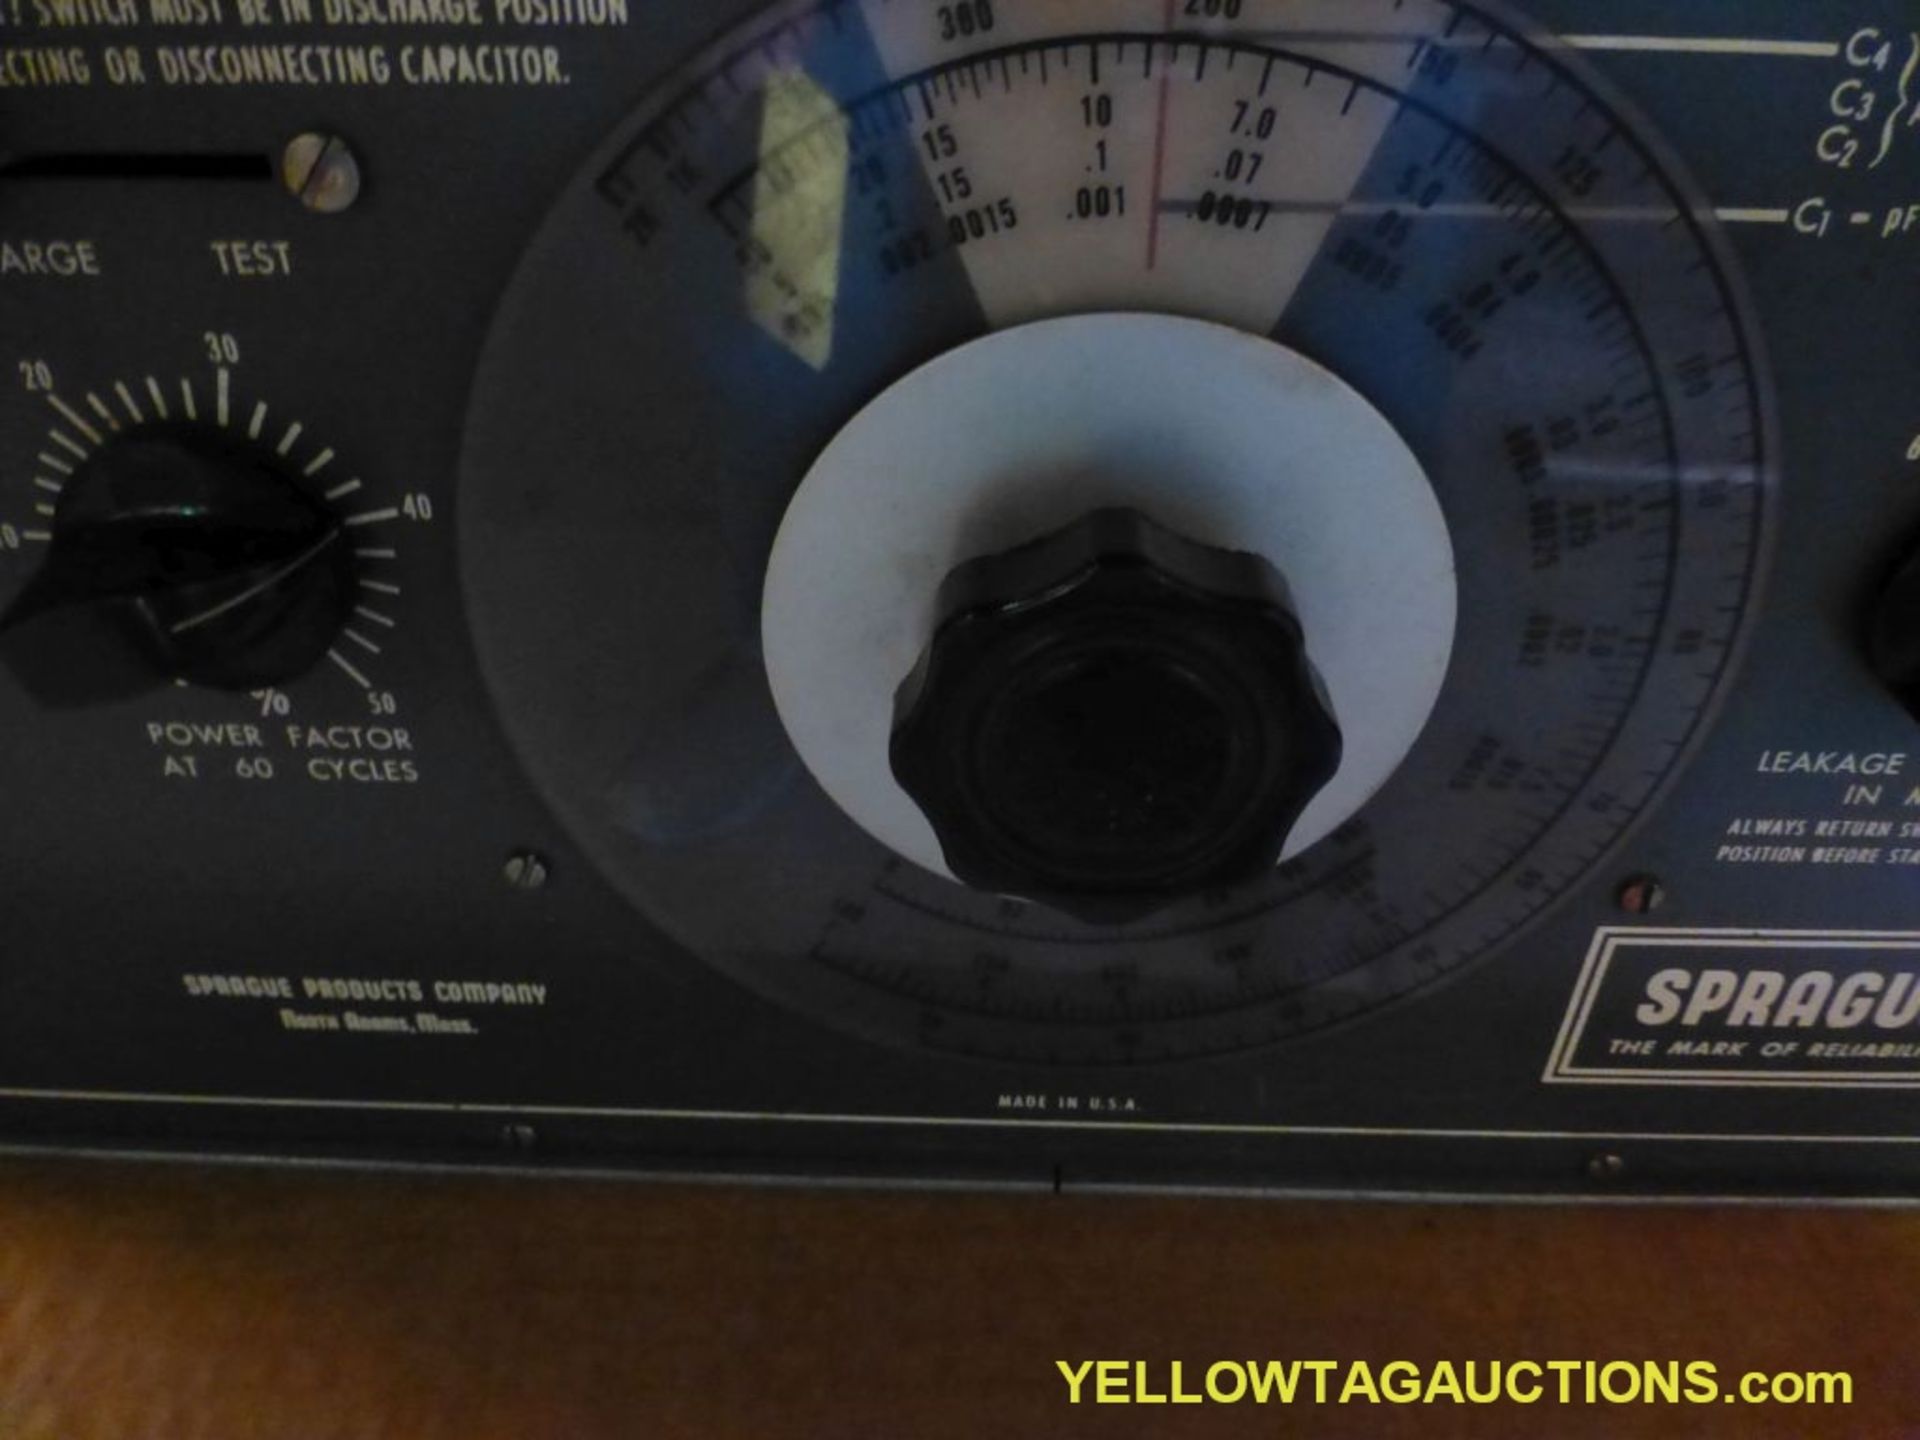 Sprague Tel-Ohmike Capacitor Analyzer | Model NO. TO-6 - Image 4 of 6